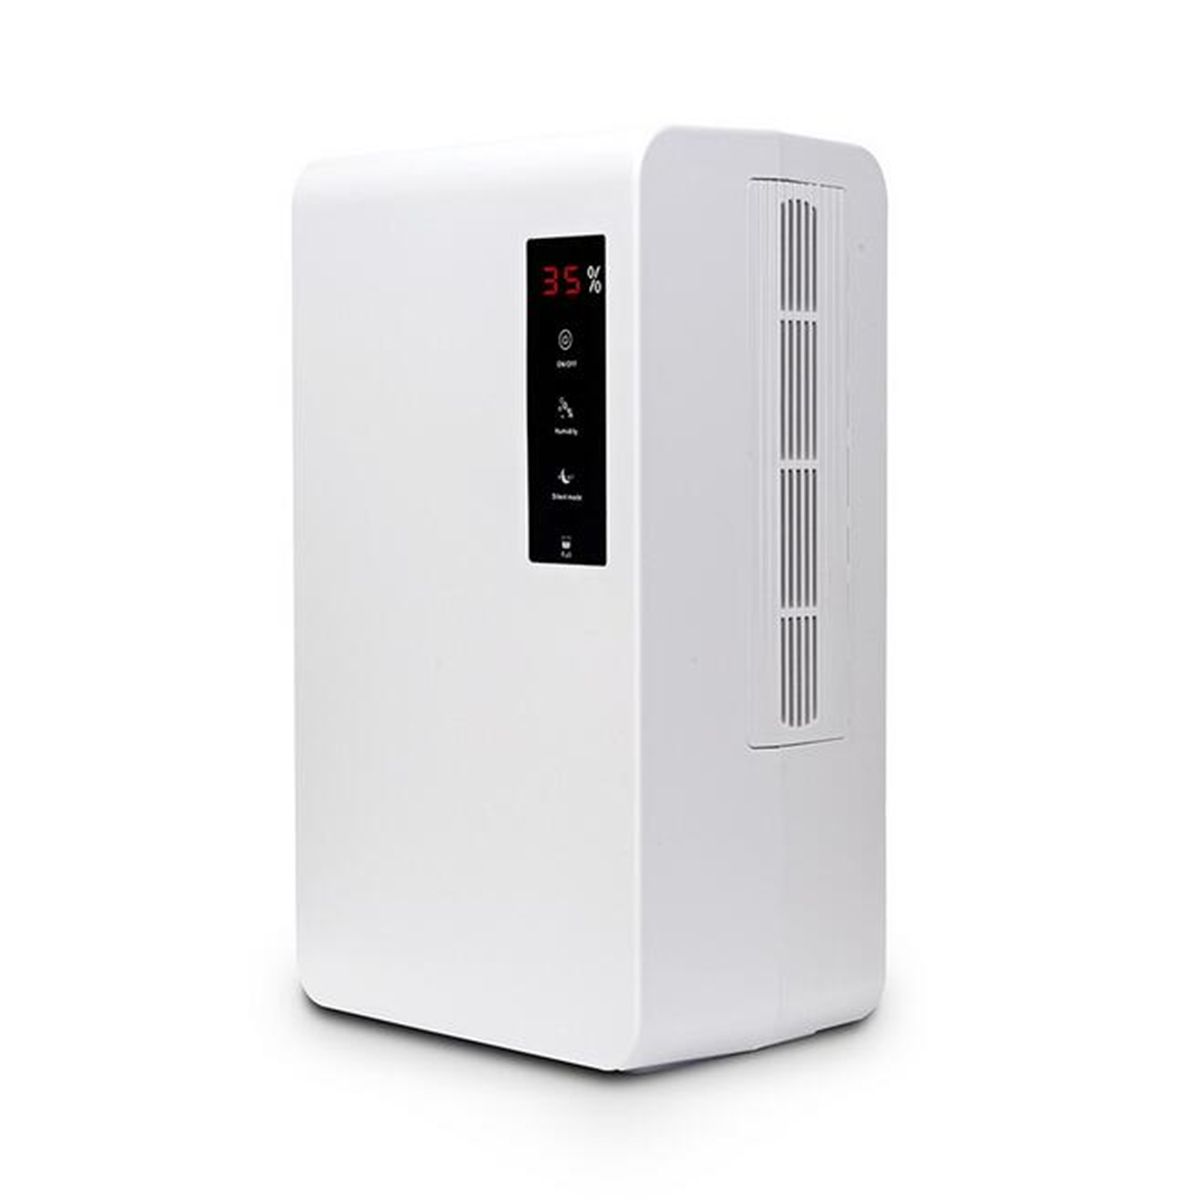 3L-150W-Smart-Dehumidifier-Electric-Eliminating-Moisture-in-Home-Dehumidifying-Air-Dryer-1401102